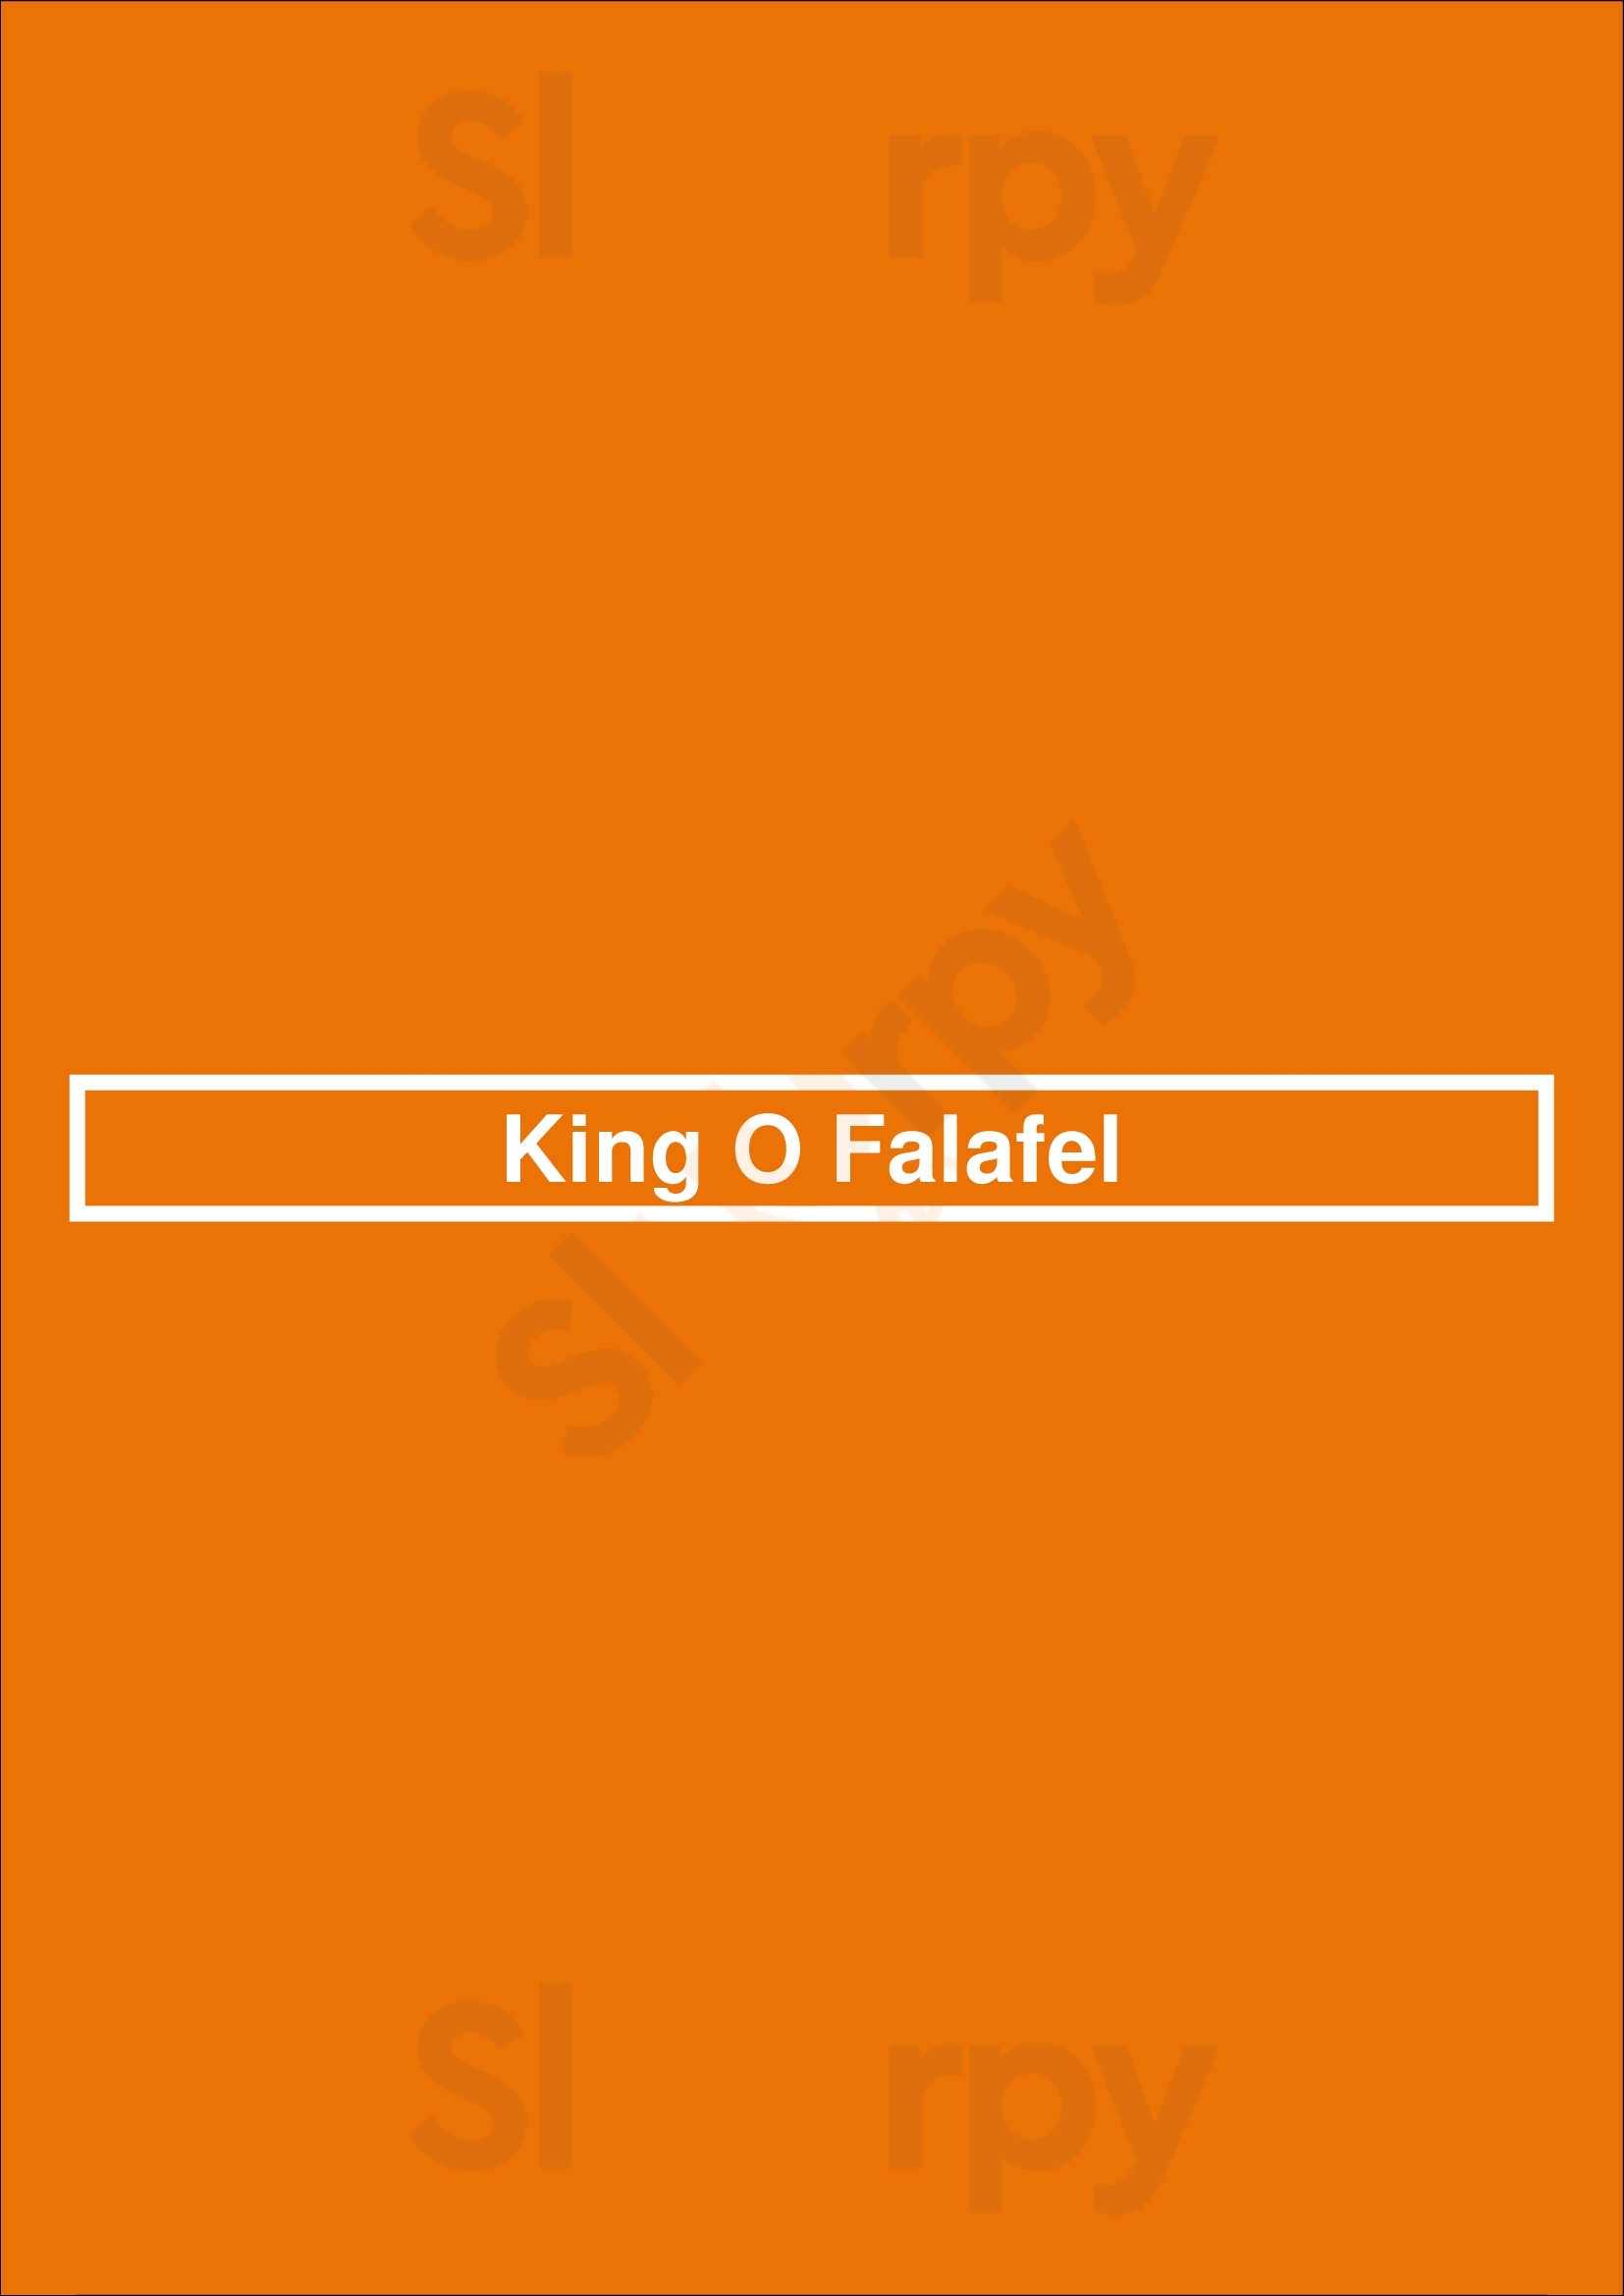 King O Falafel Kissimmee Menu - 1